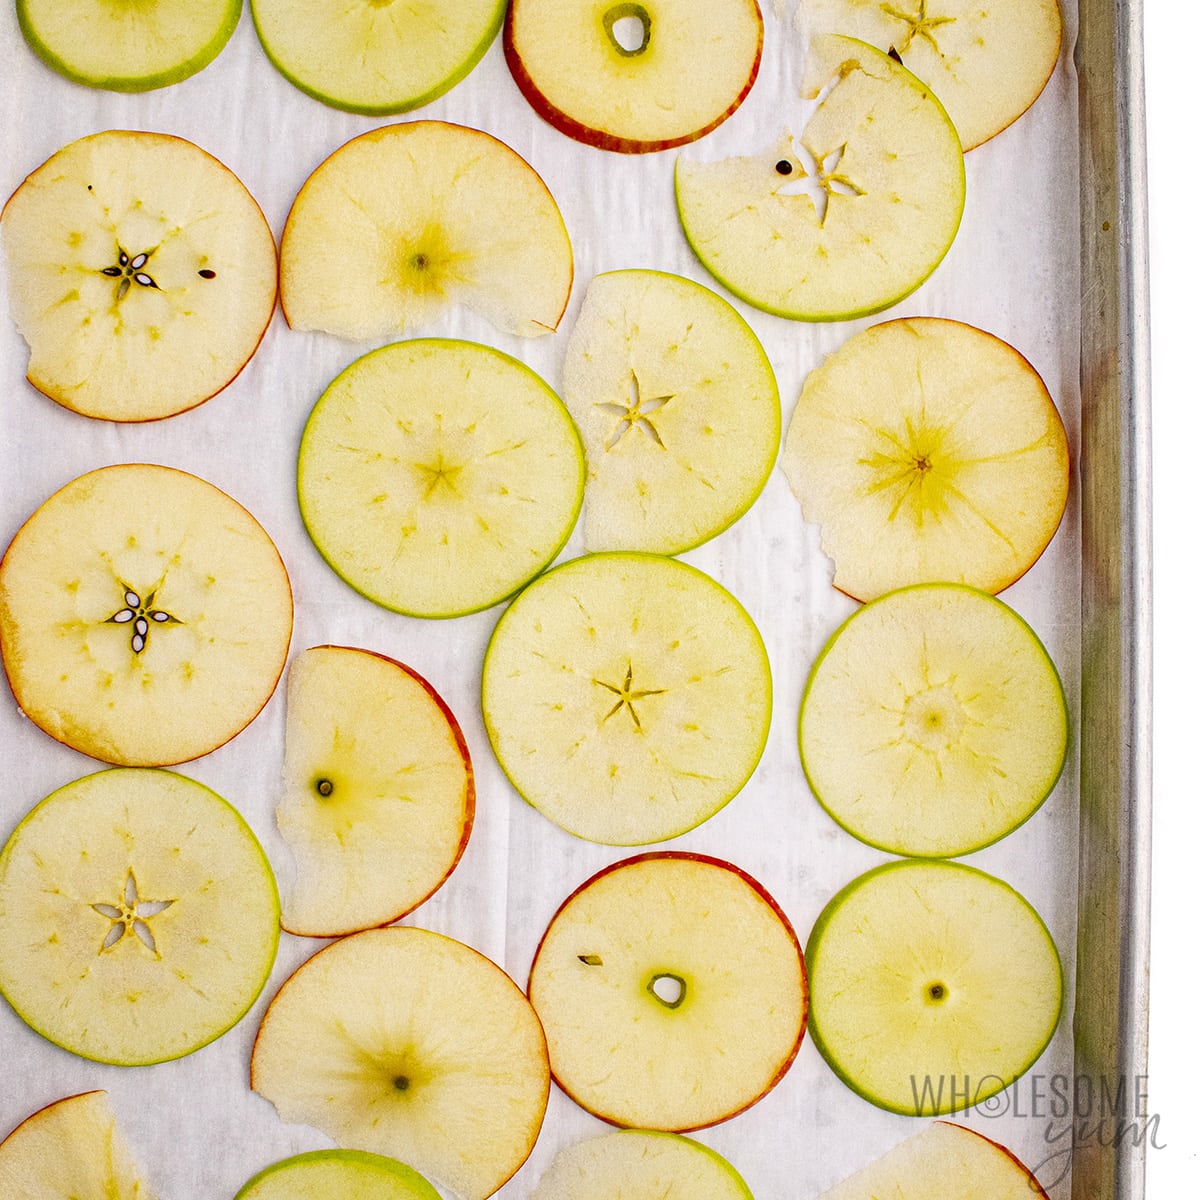 Apple slices arranged on a baking sheet.